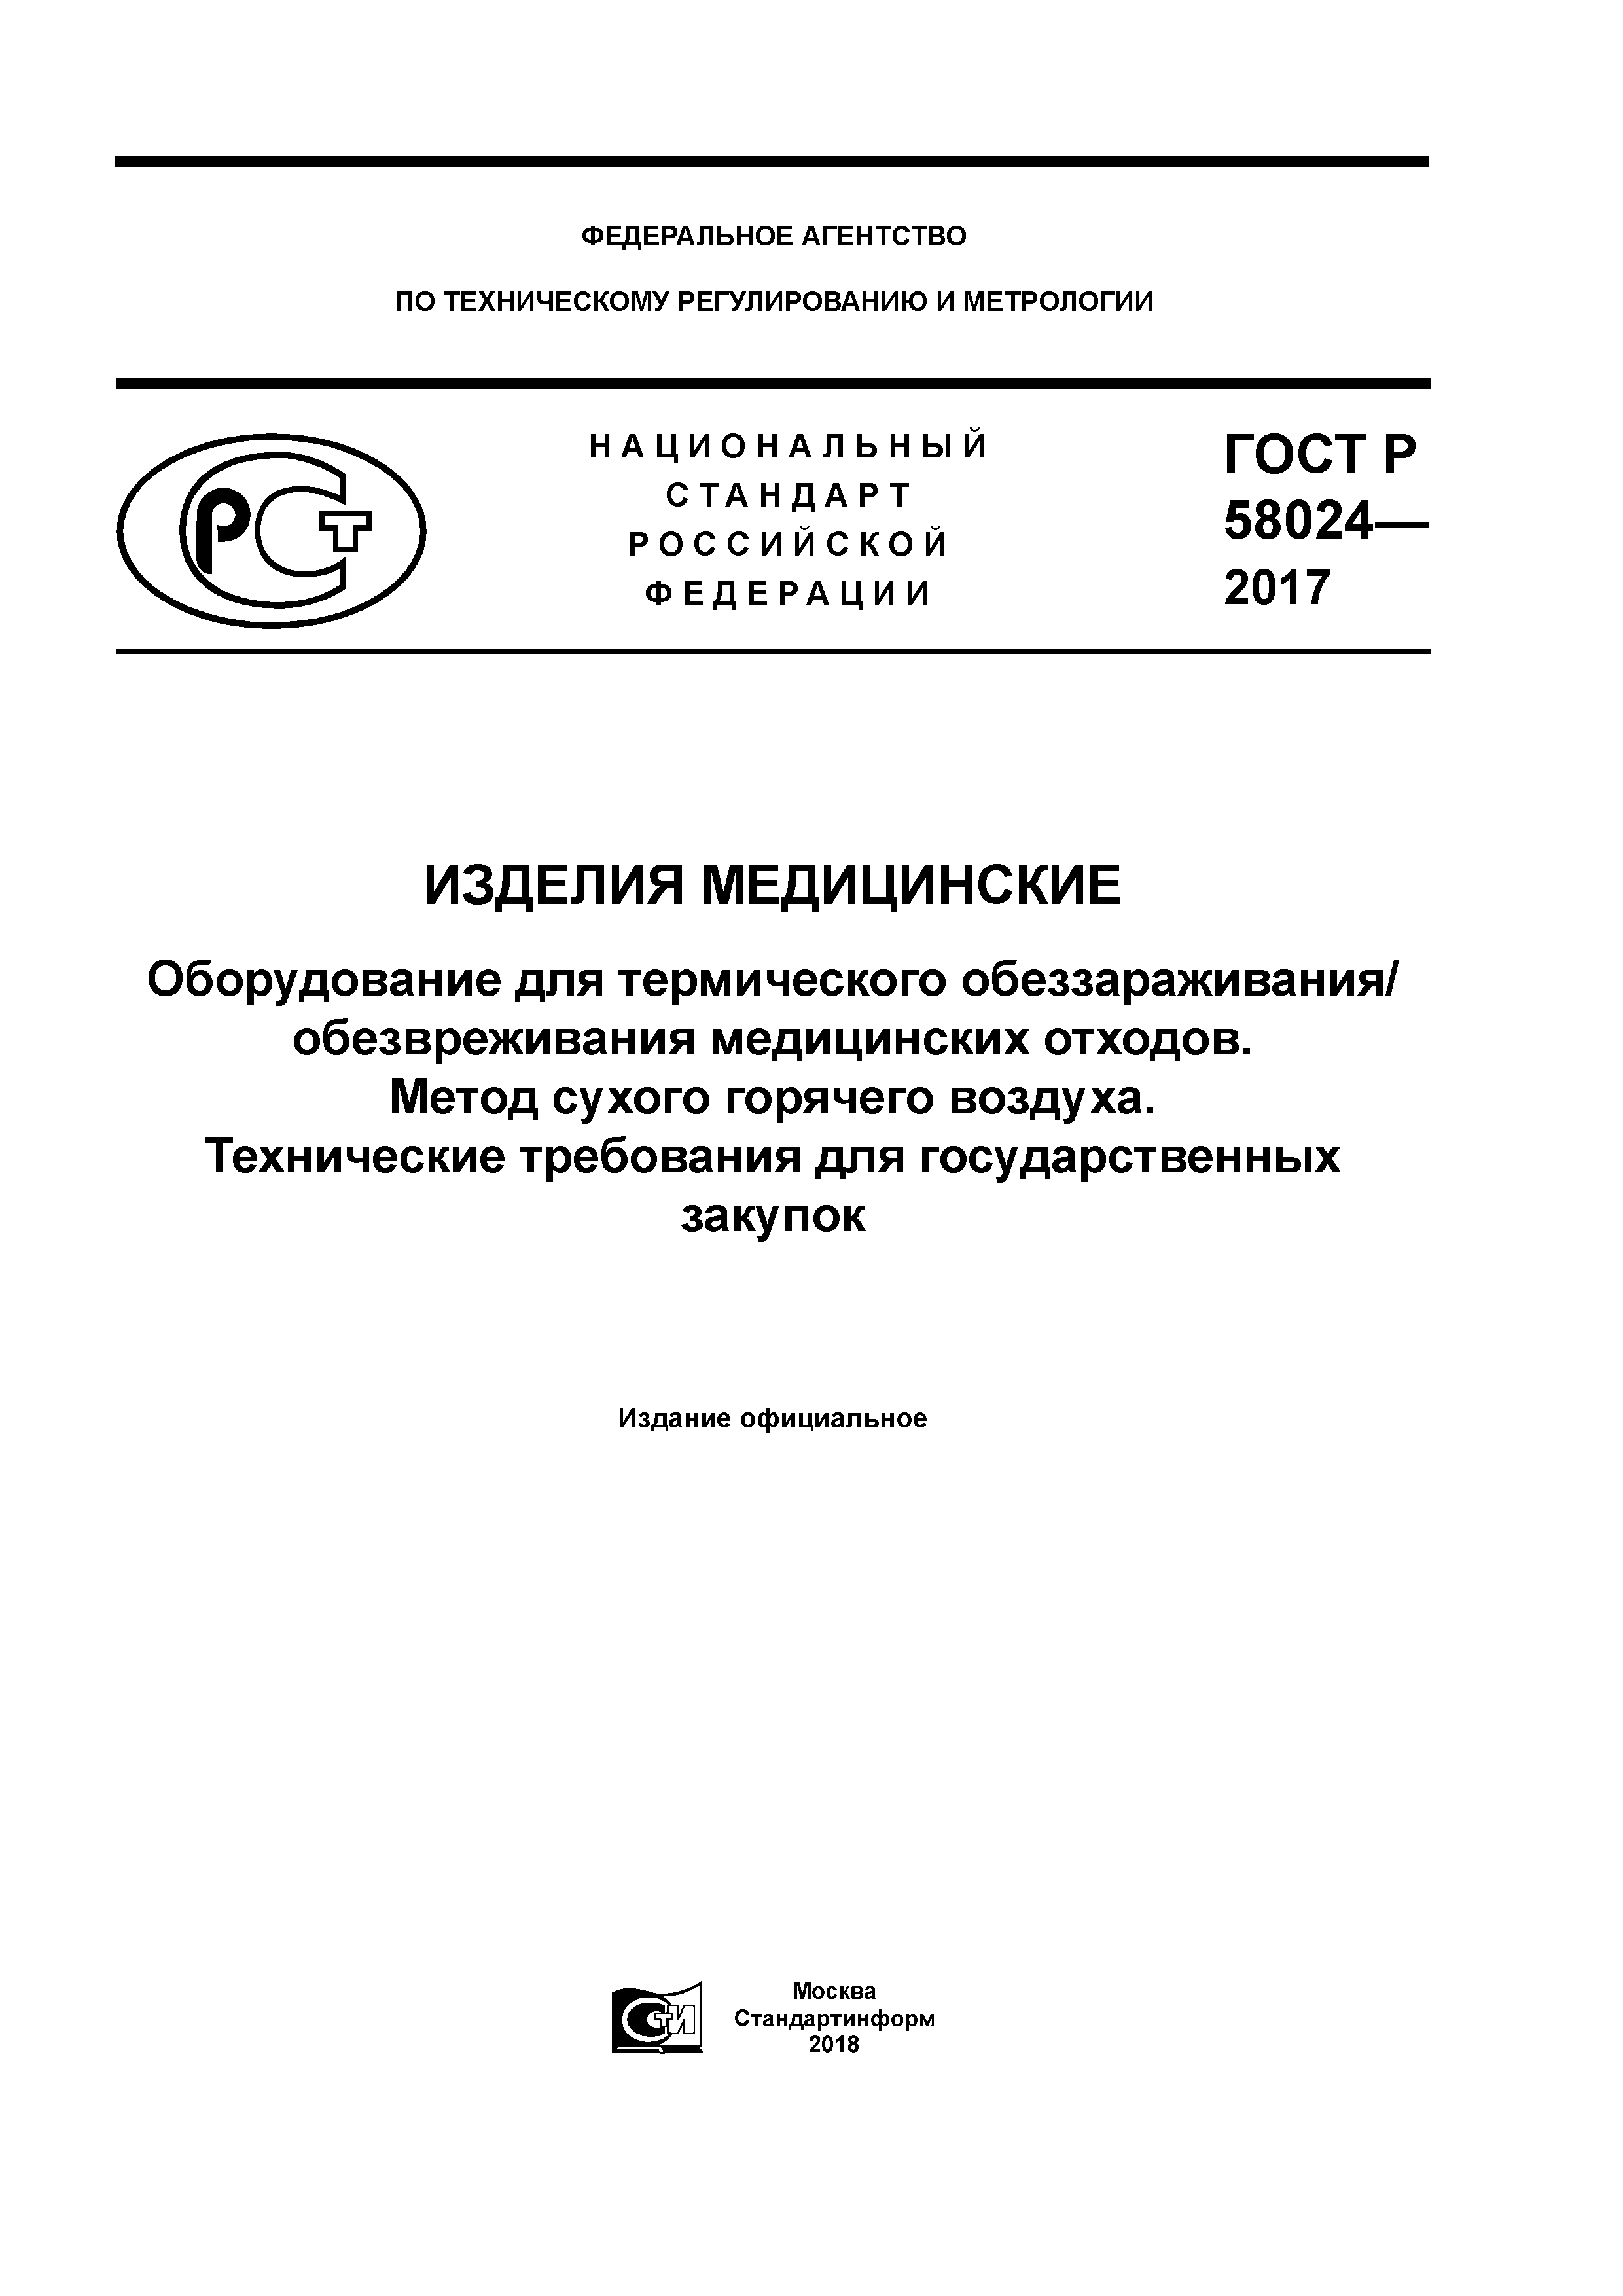 ГОСТ Р 58024-2017